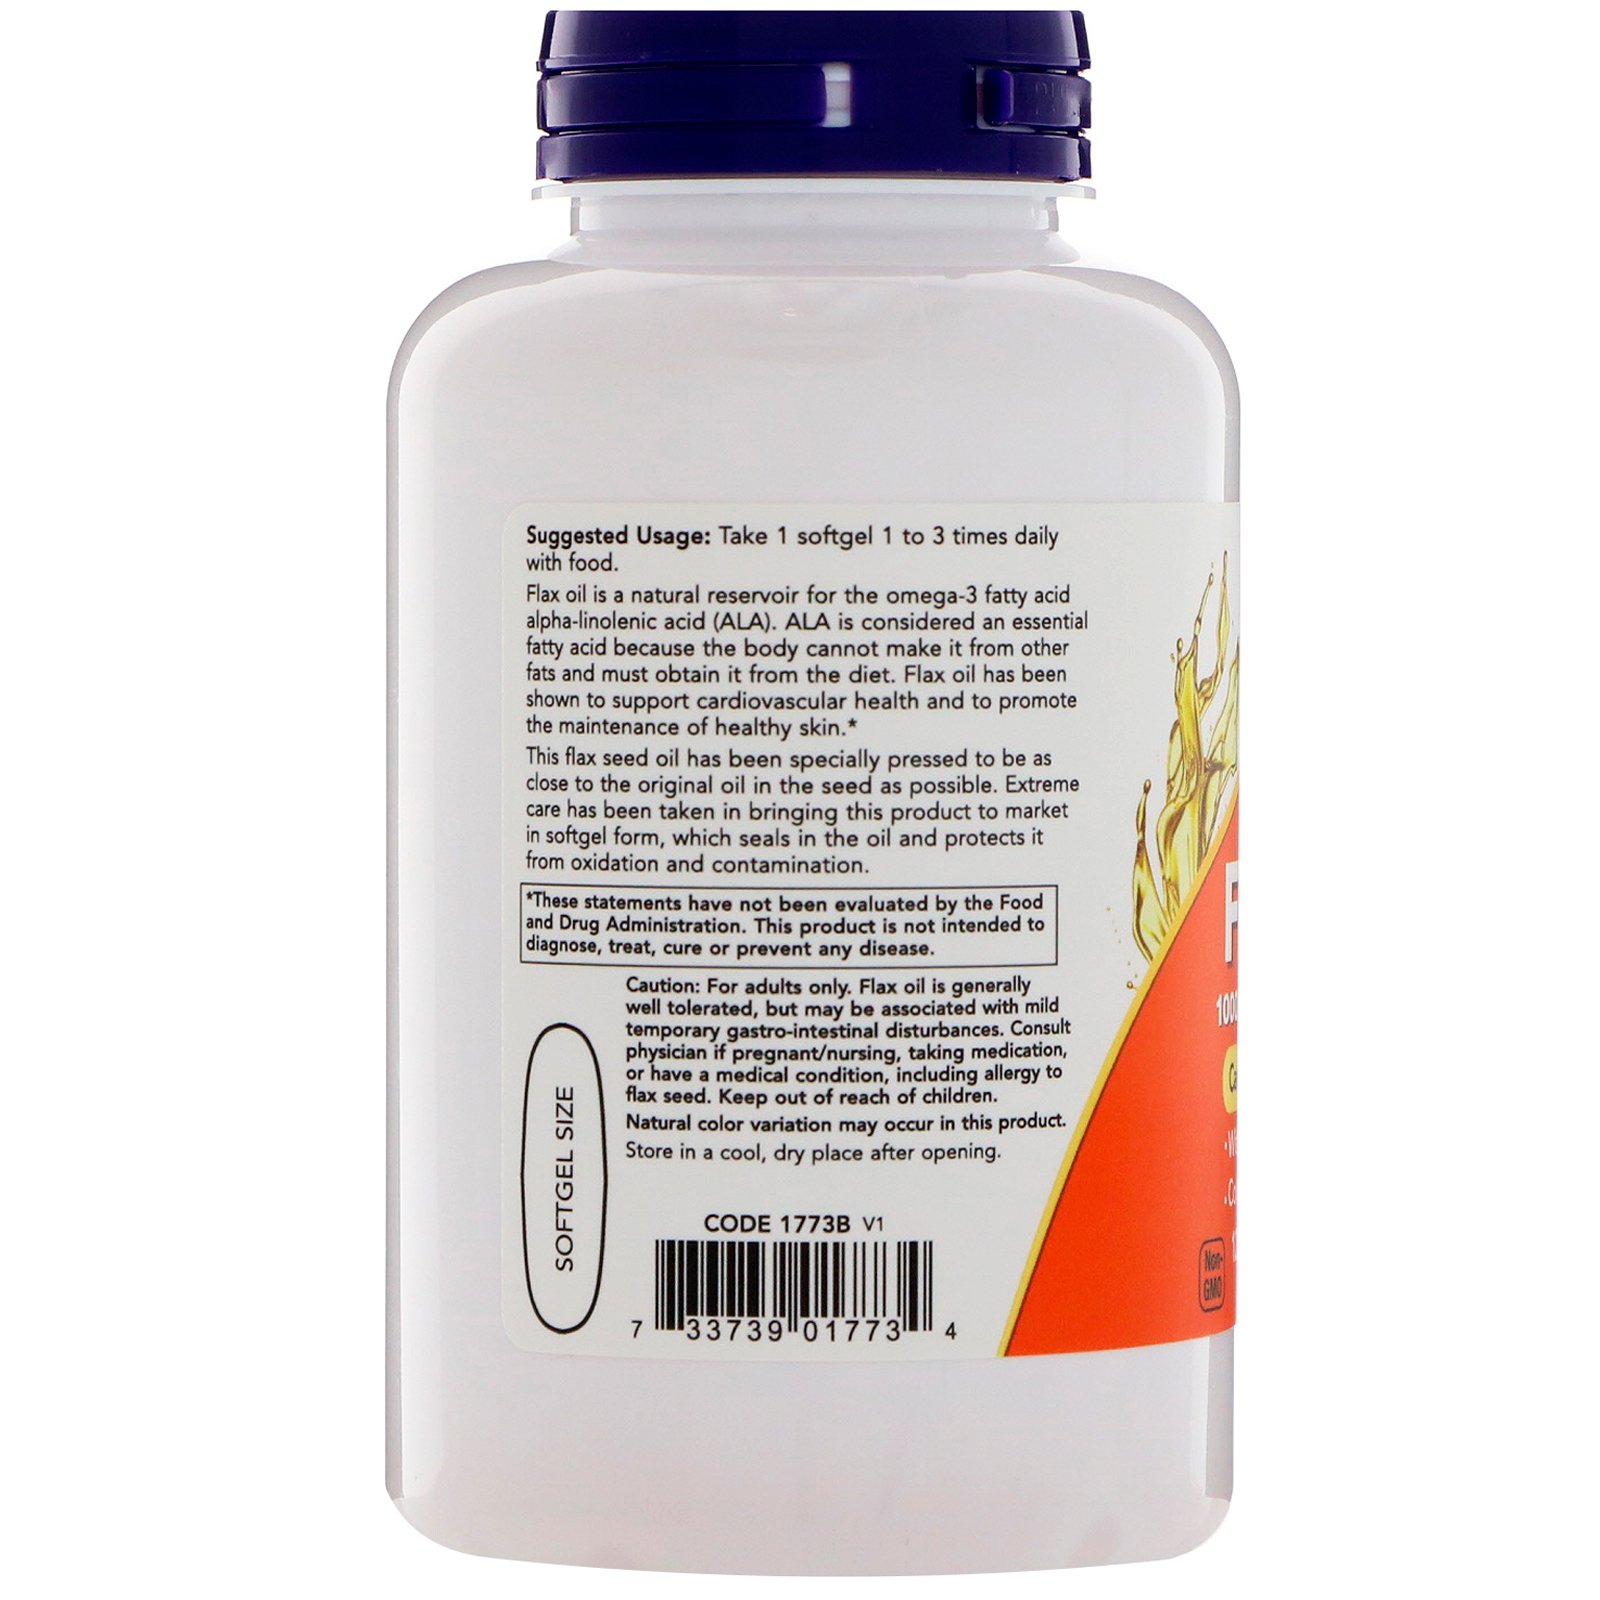 Flax Oil, Льняное Масло 1000 мг - 120 вегетарианских капсул